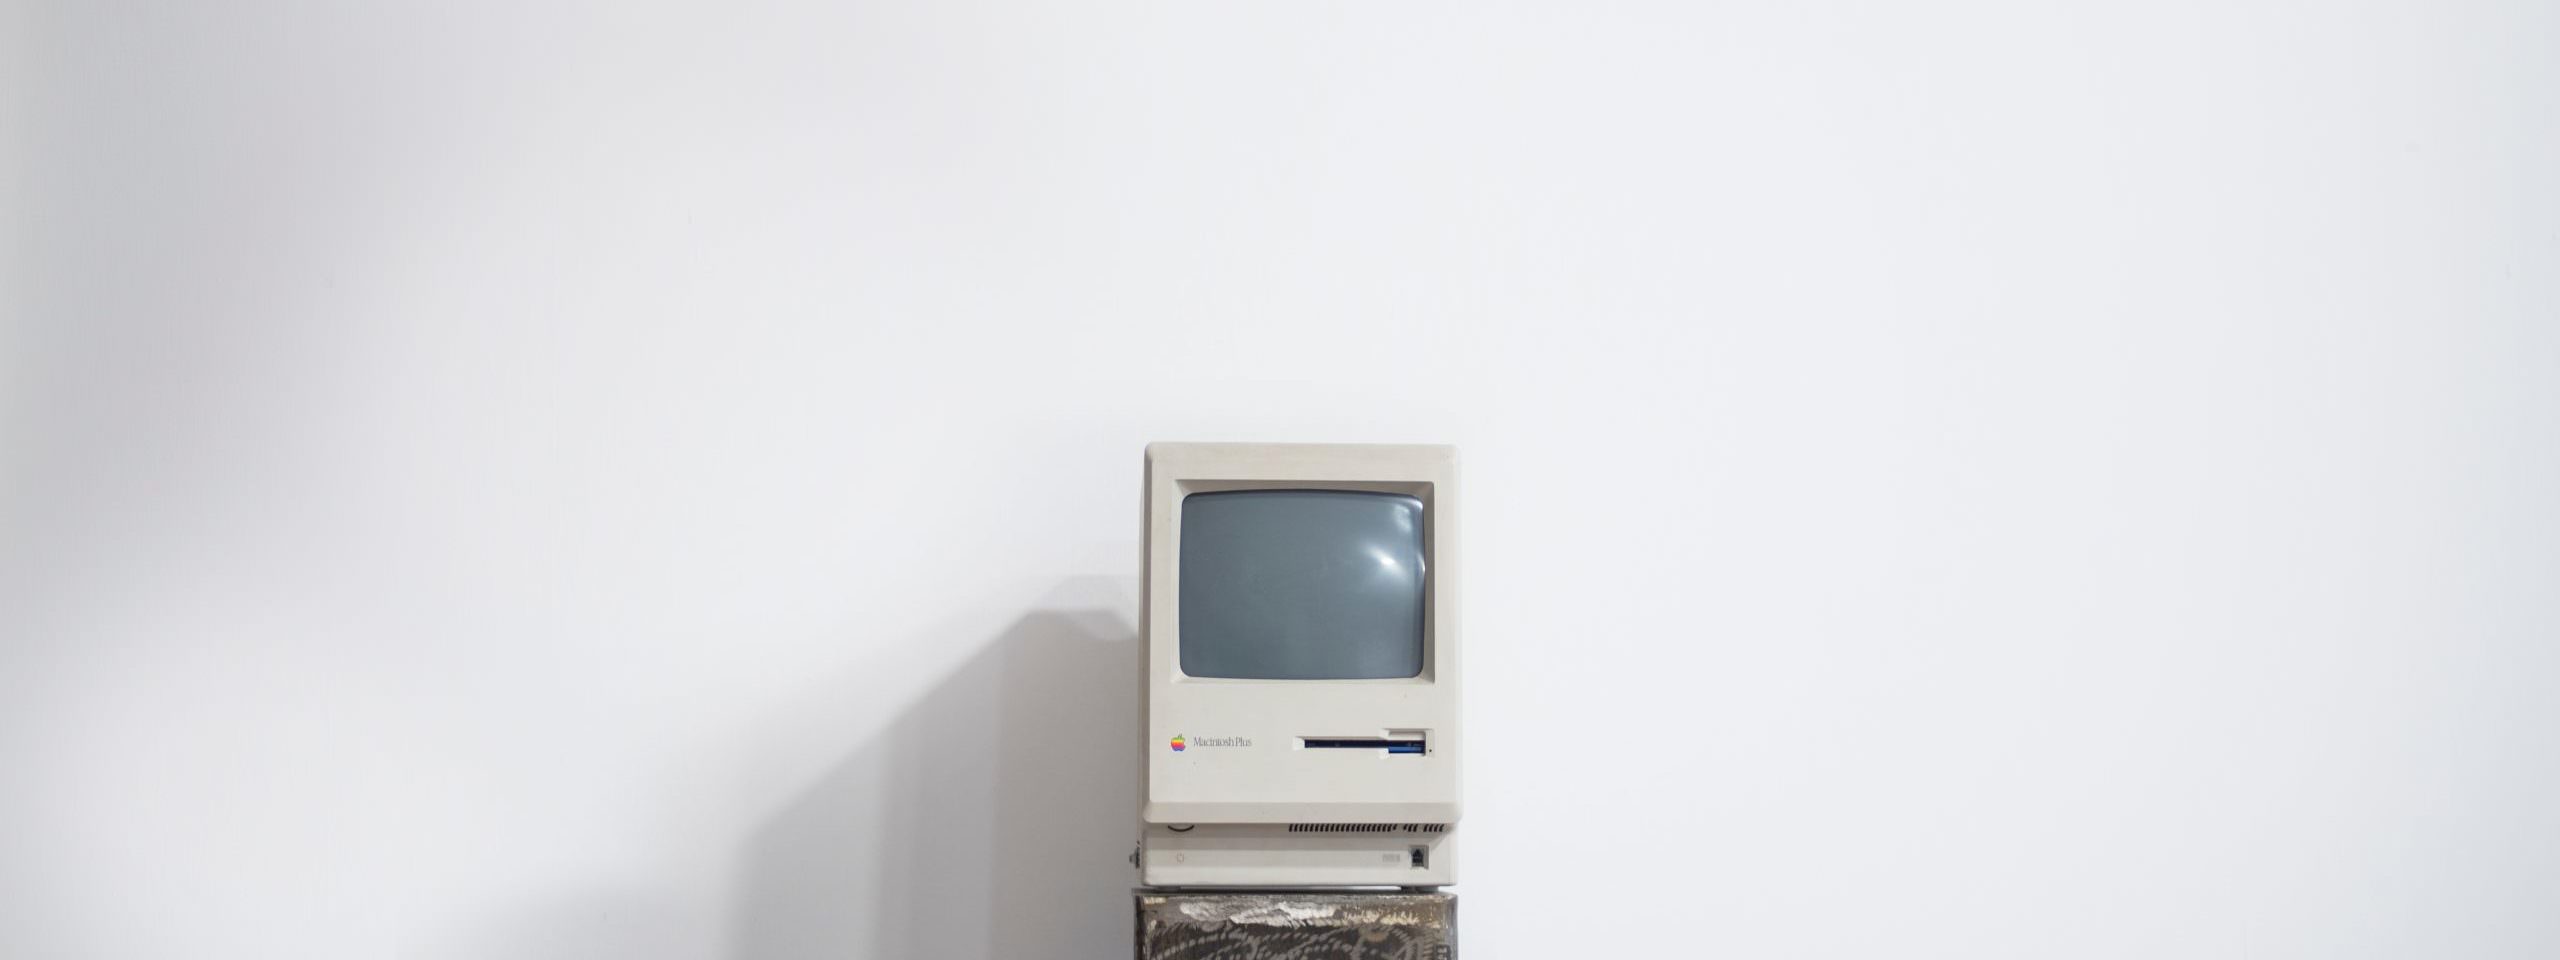 old macintosh computer